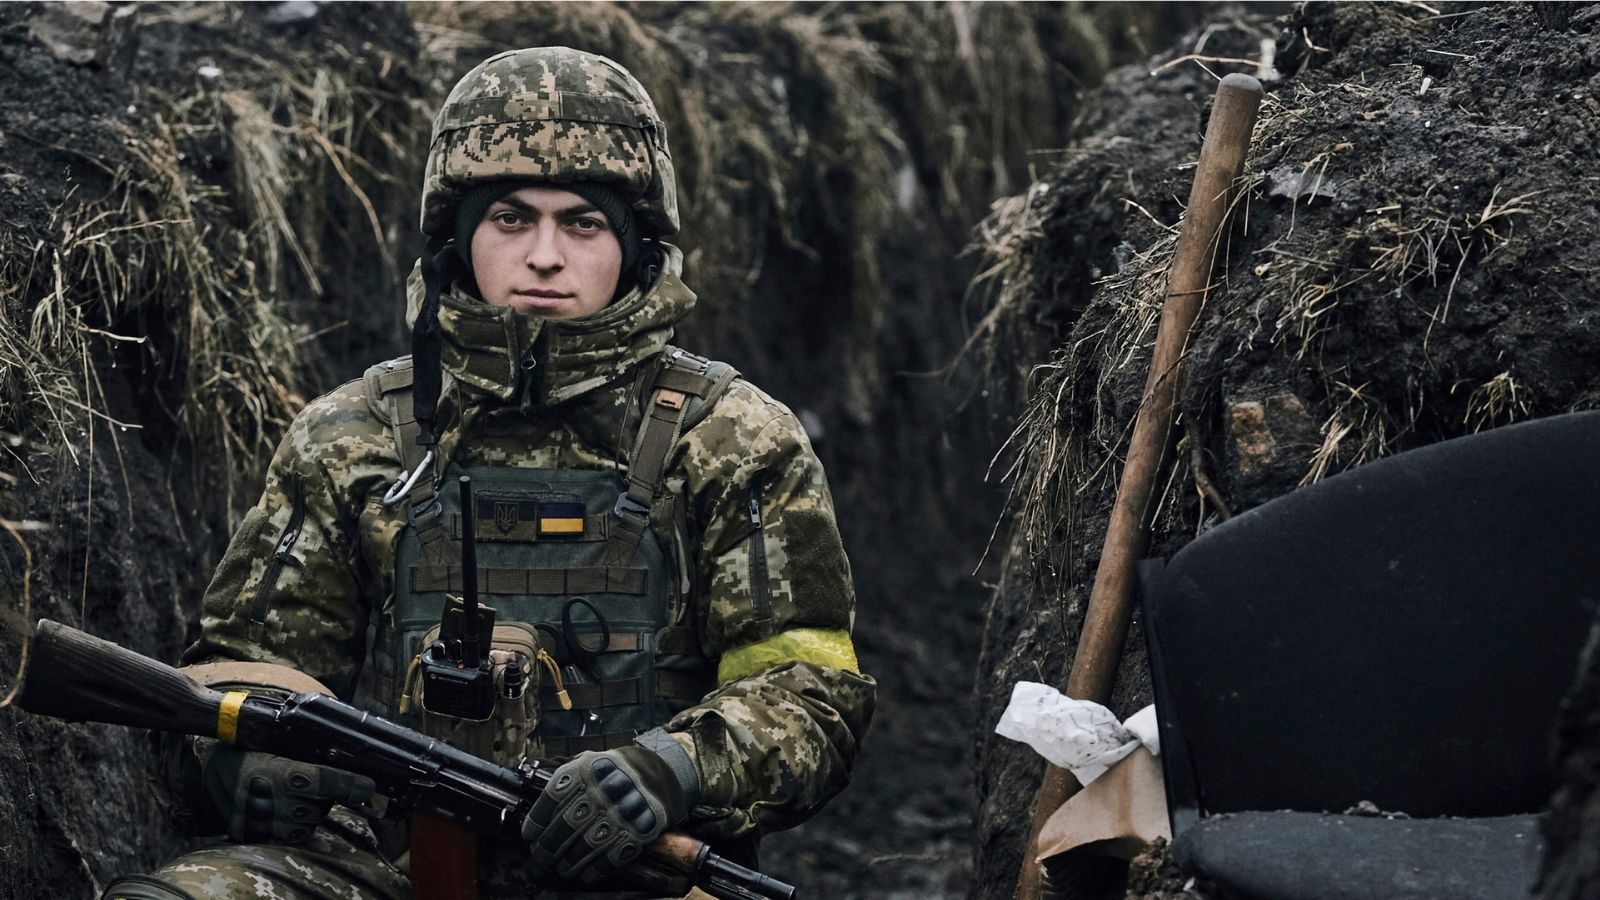 Rusia bersiap untuk serangan “terakhir” di Ukraina;  Donbass Tujuan Utama dari Rencana Aneksasi Timur: Sumber Daya Kremlin